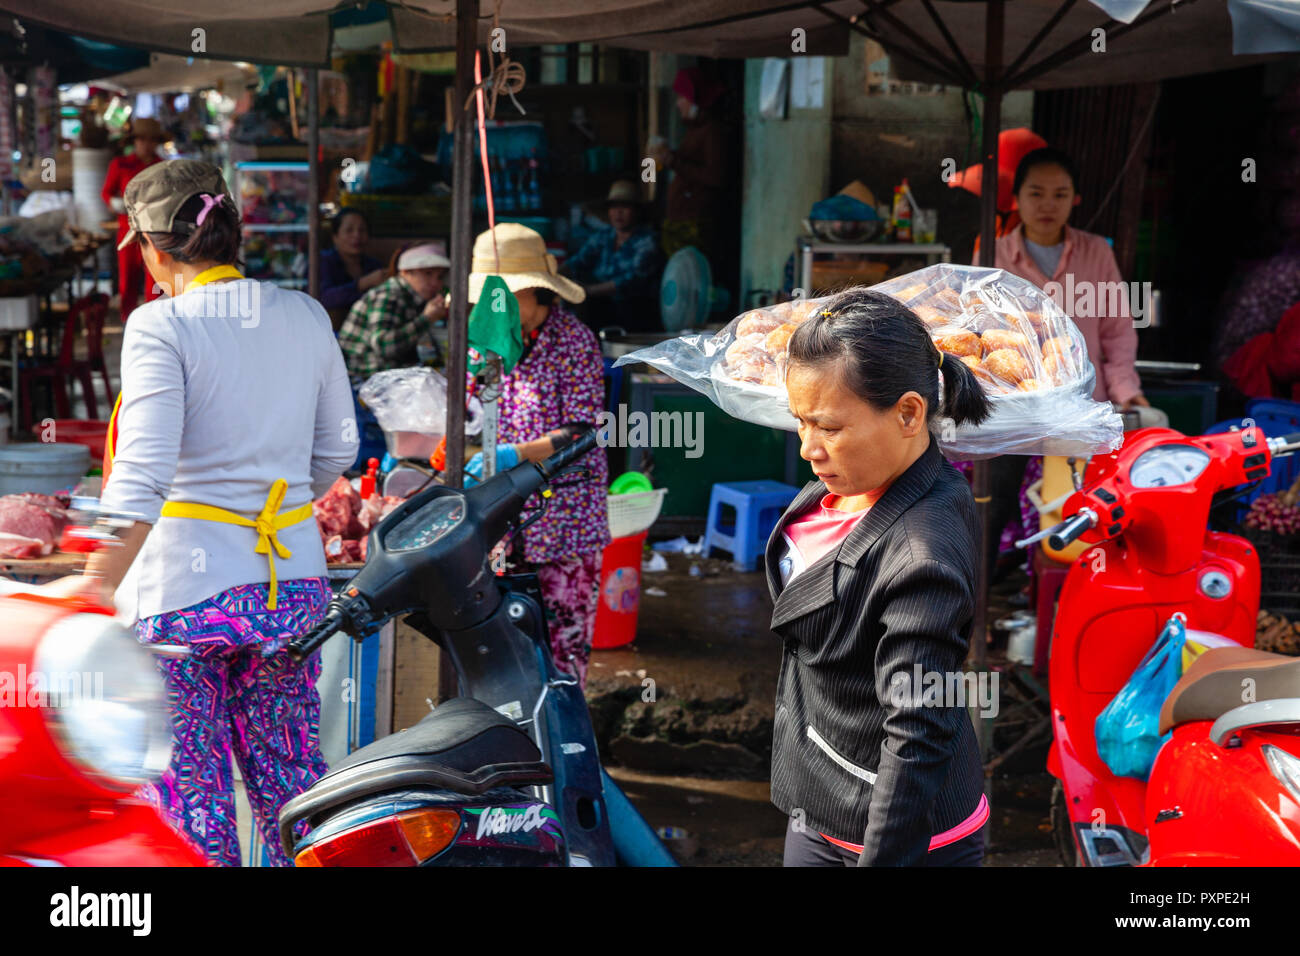 NHA TRANG, VIETNAM - SEPTEMBER 12: A Vietnamese woman sells donuts on the street market on September 12, 2018 in Nha Trang, Vietnam. Stock Photo